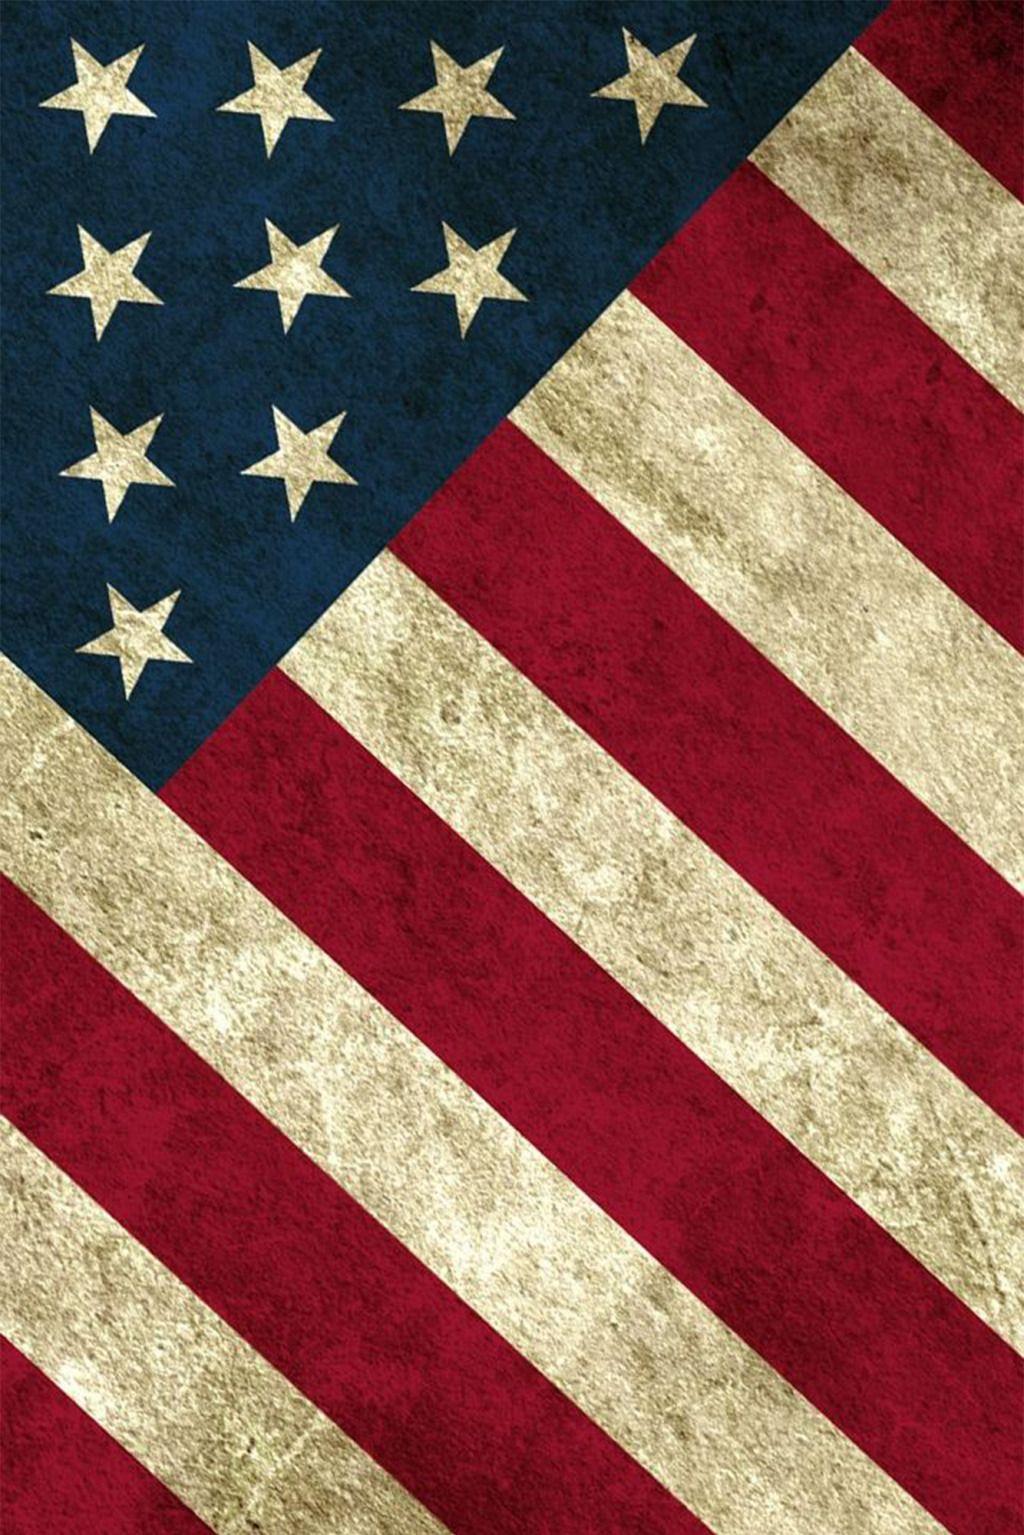 American Flag IPhone Wallpaper HD Skilal JPEG Image